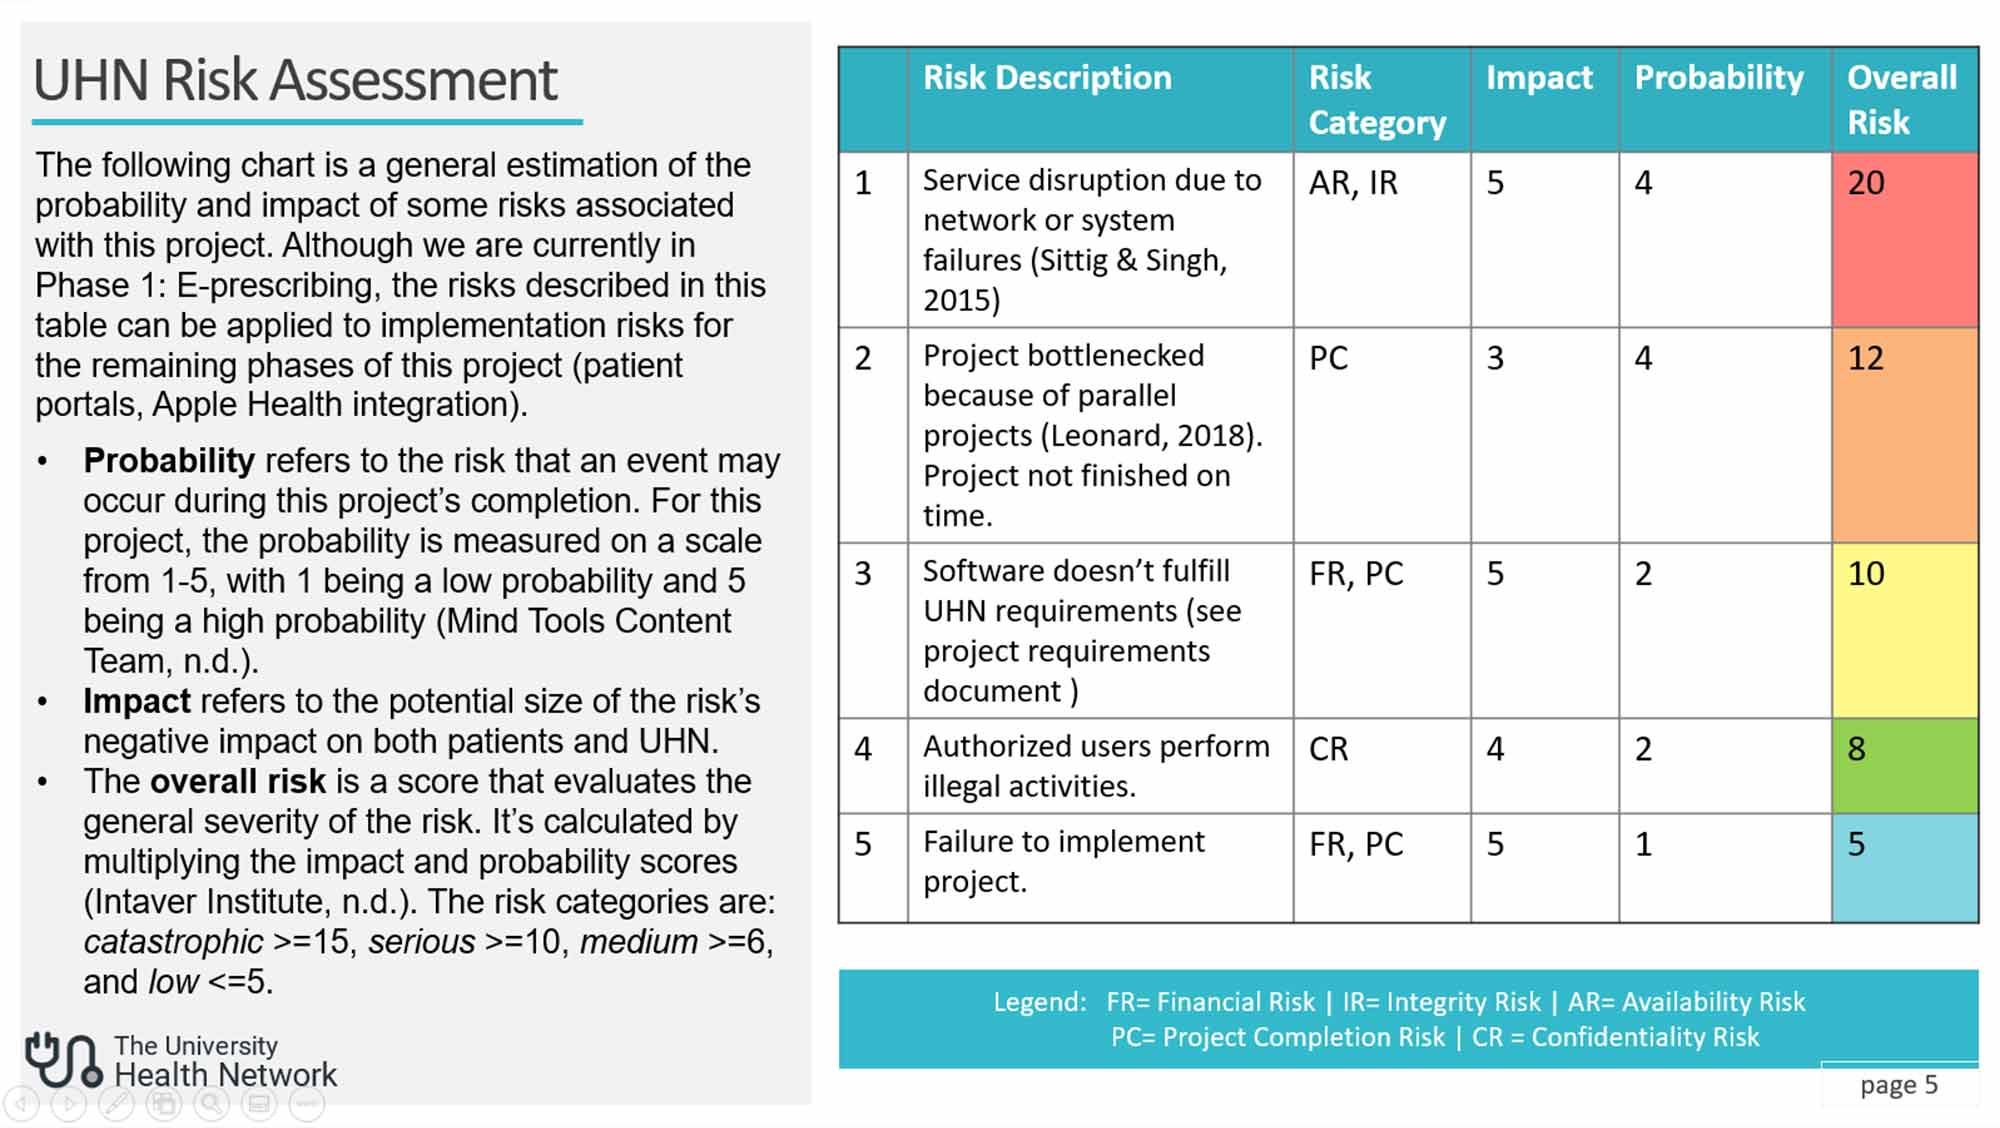 A risk assessment slide from the presentation